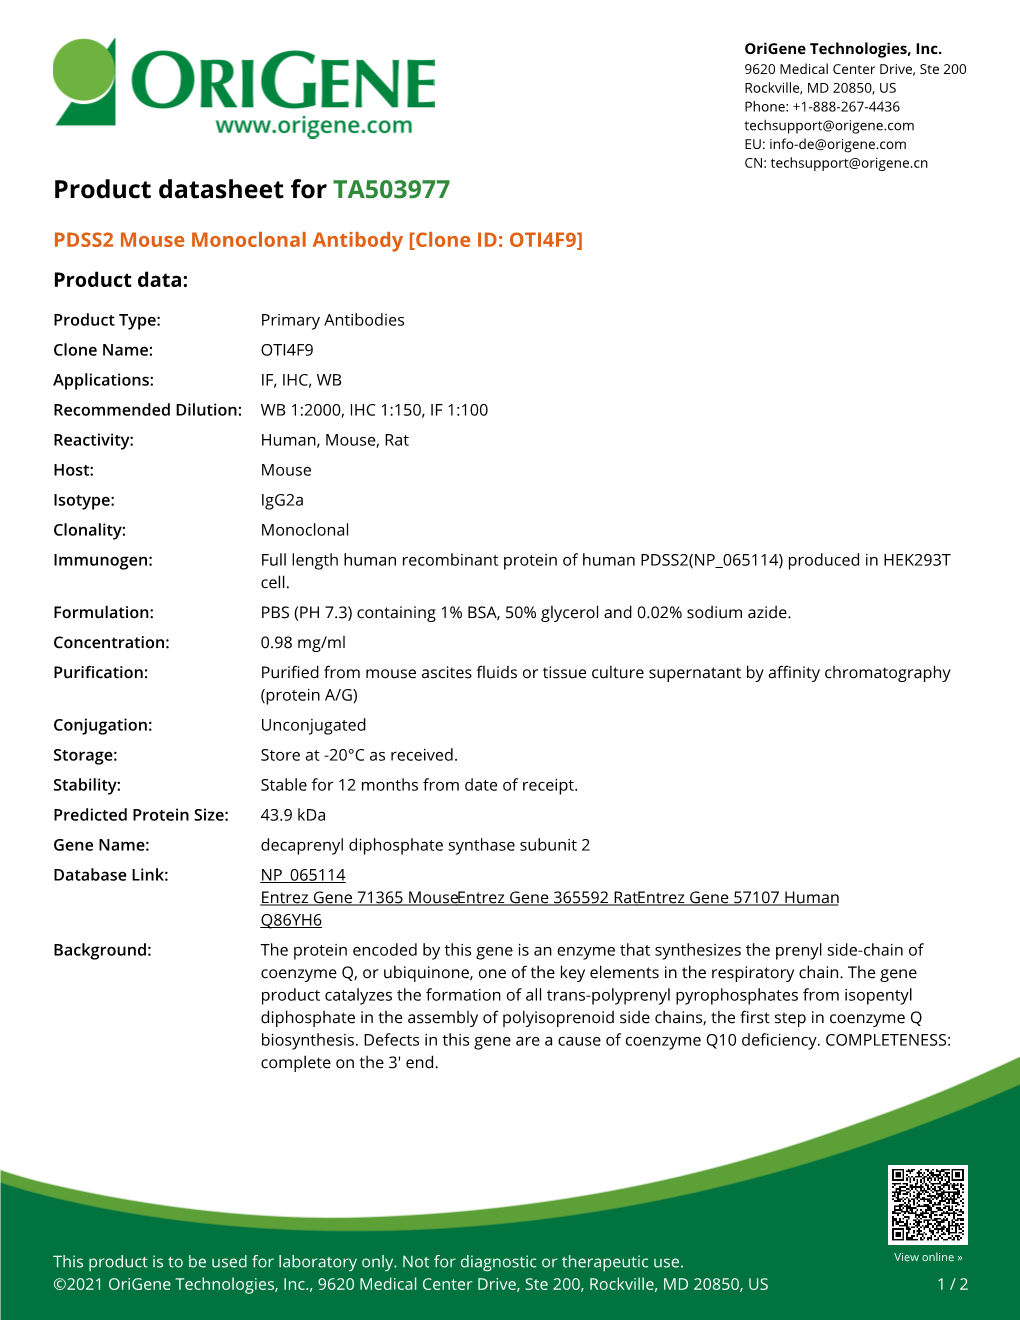 PDSS2 Mouse Monoclonal Antibody [Clone ID: OTI4F9] Product Data